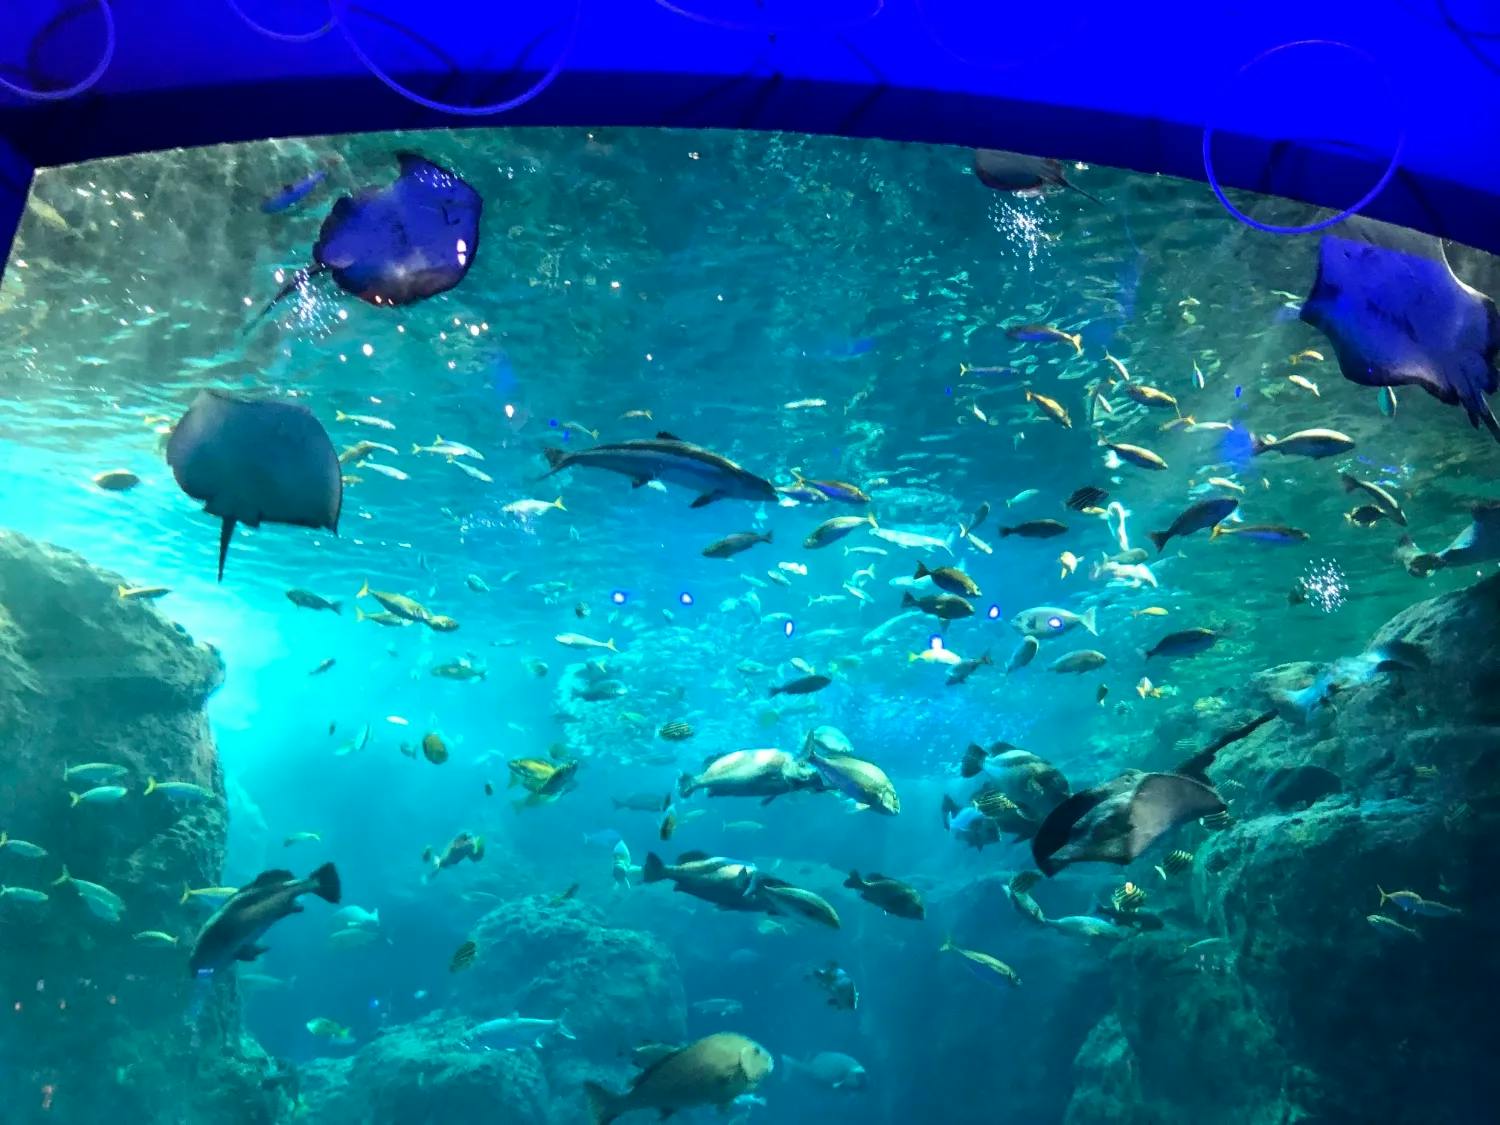 The Sagami Bay Tank in the Enoshima Aquarium